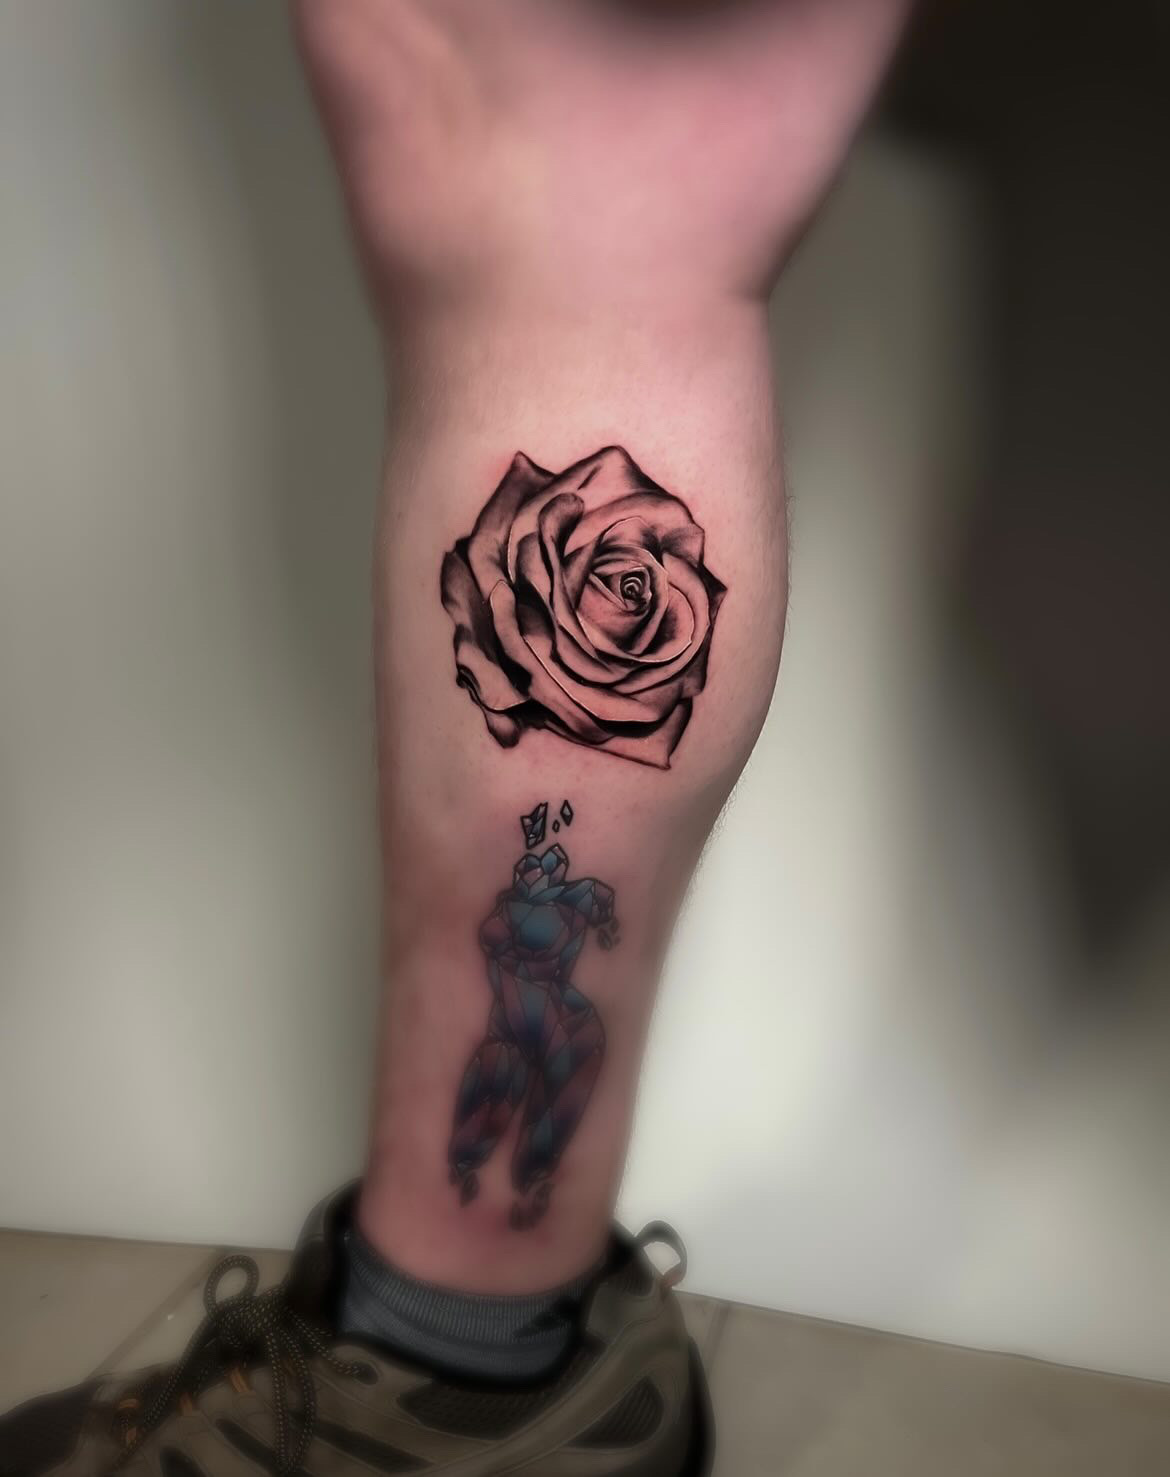 Fine line rose tattoo on a calf by tattoo artist Alessandra Clivio.